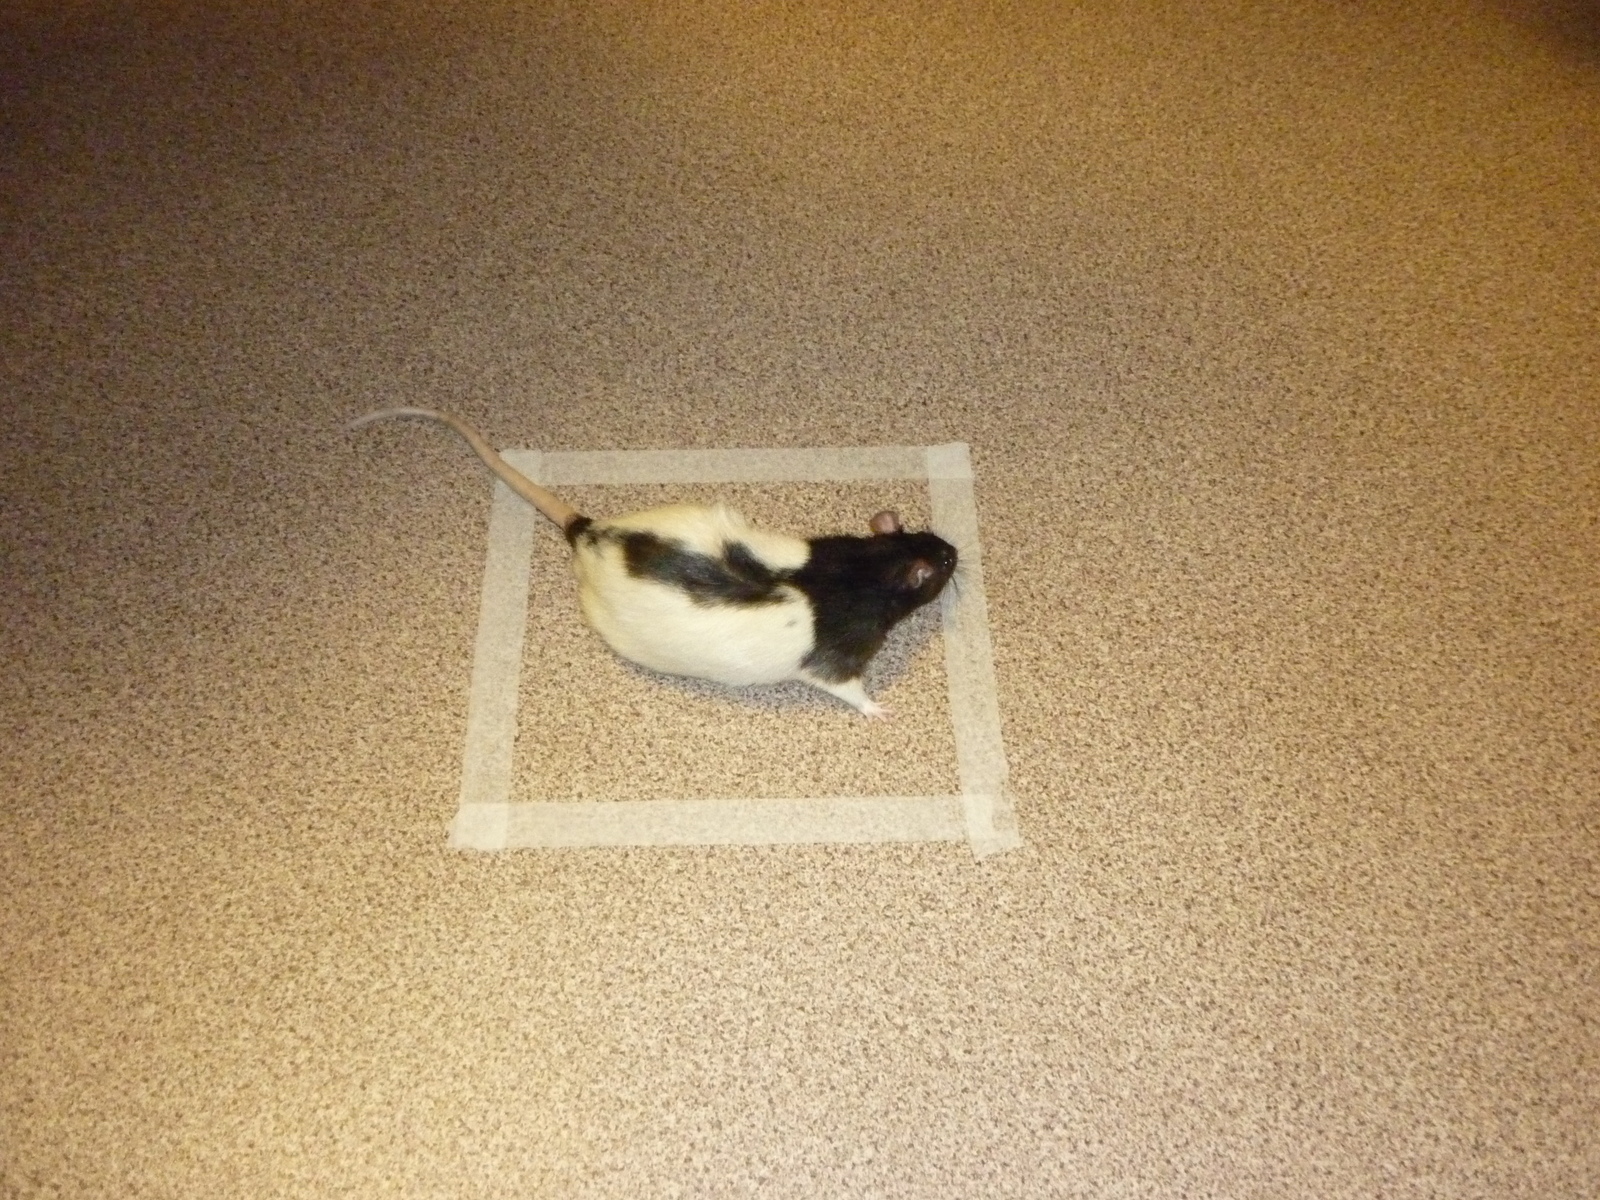 An experiment with a rat. - My, Rat, Magic, Experiment